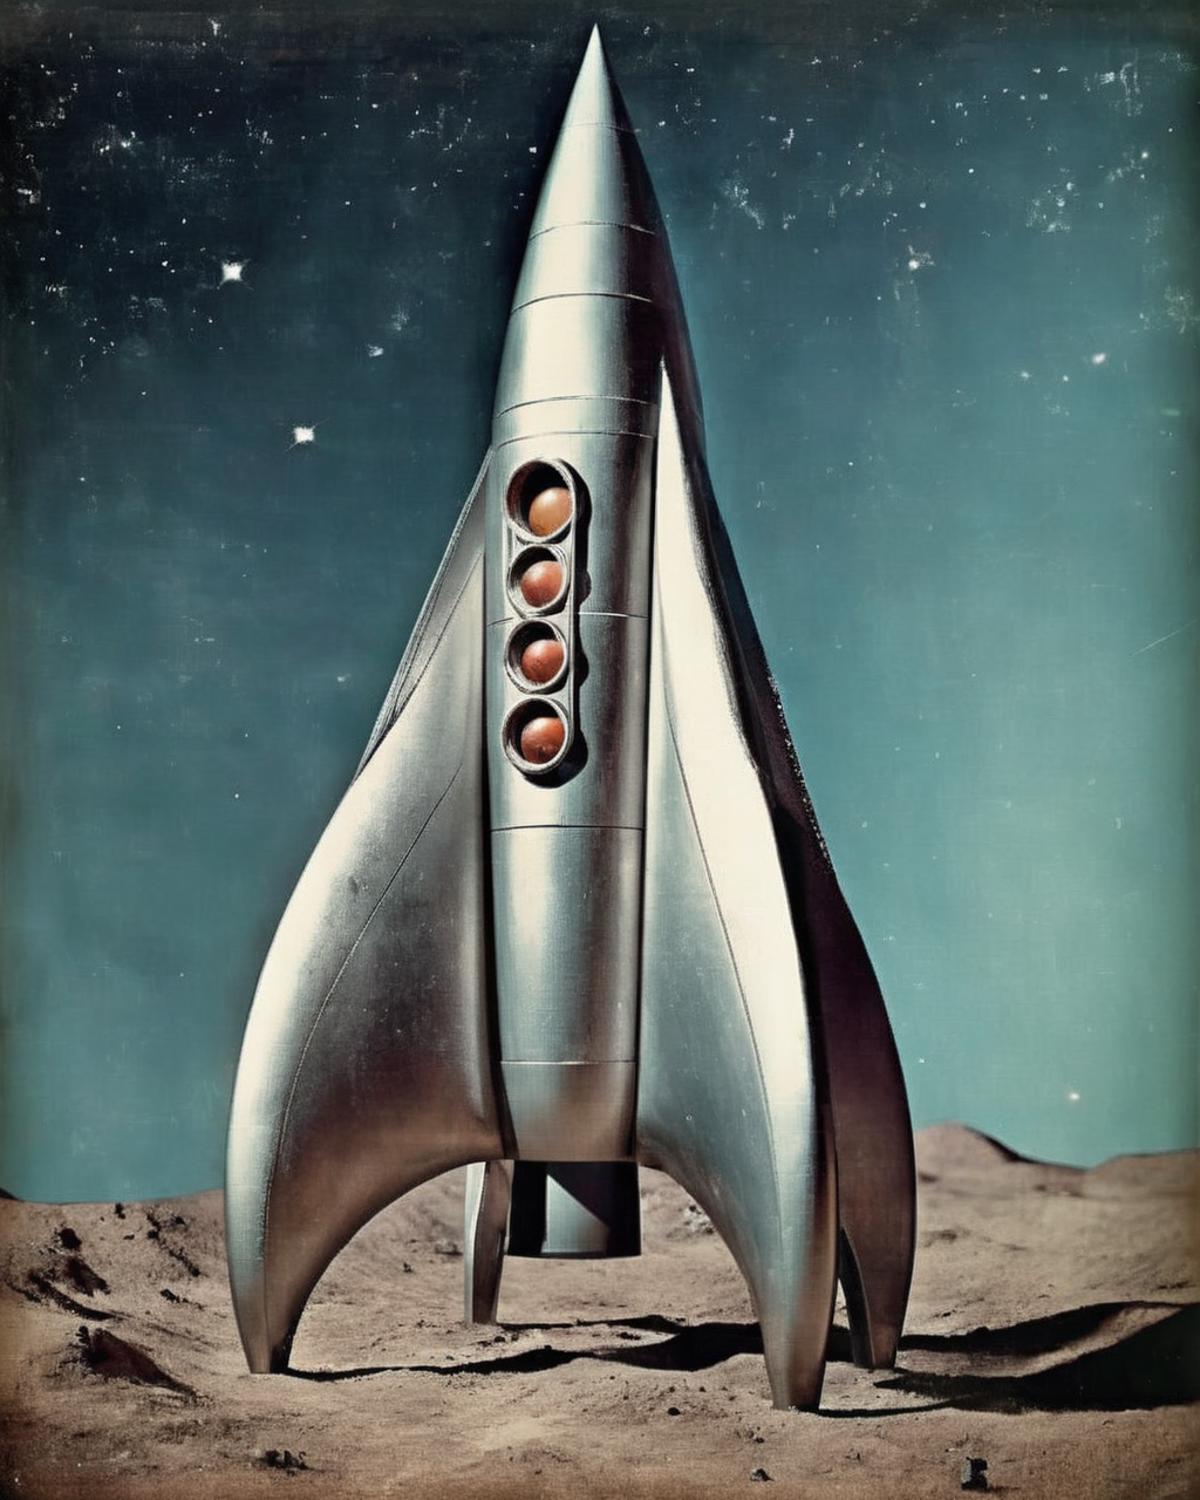 Retro Rocket image by Ciro_Negrogni